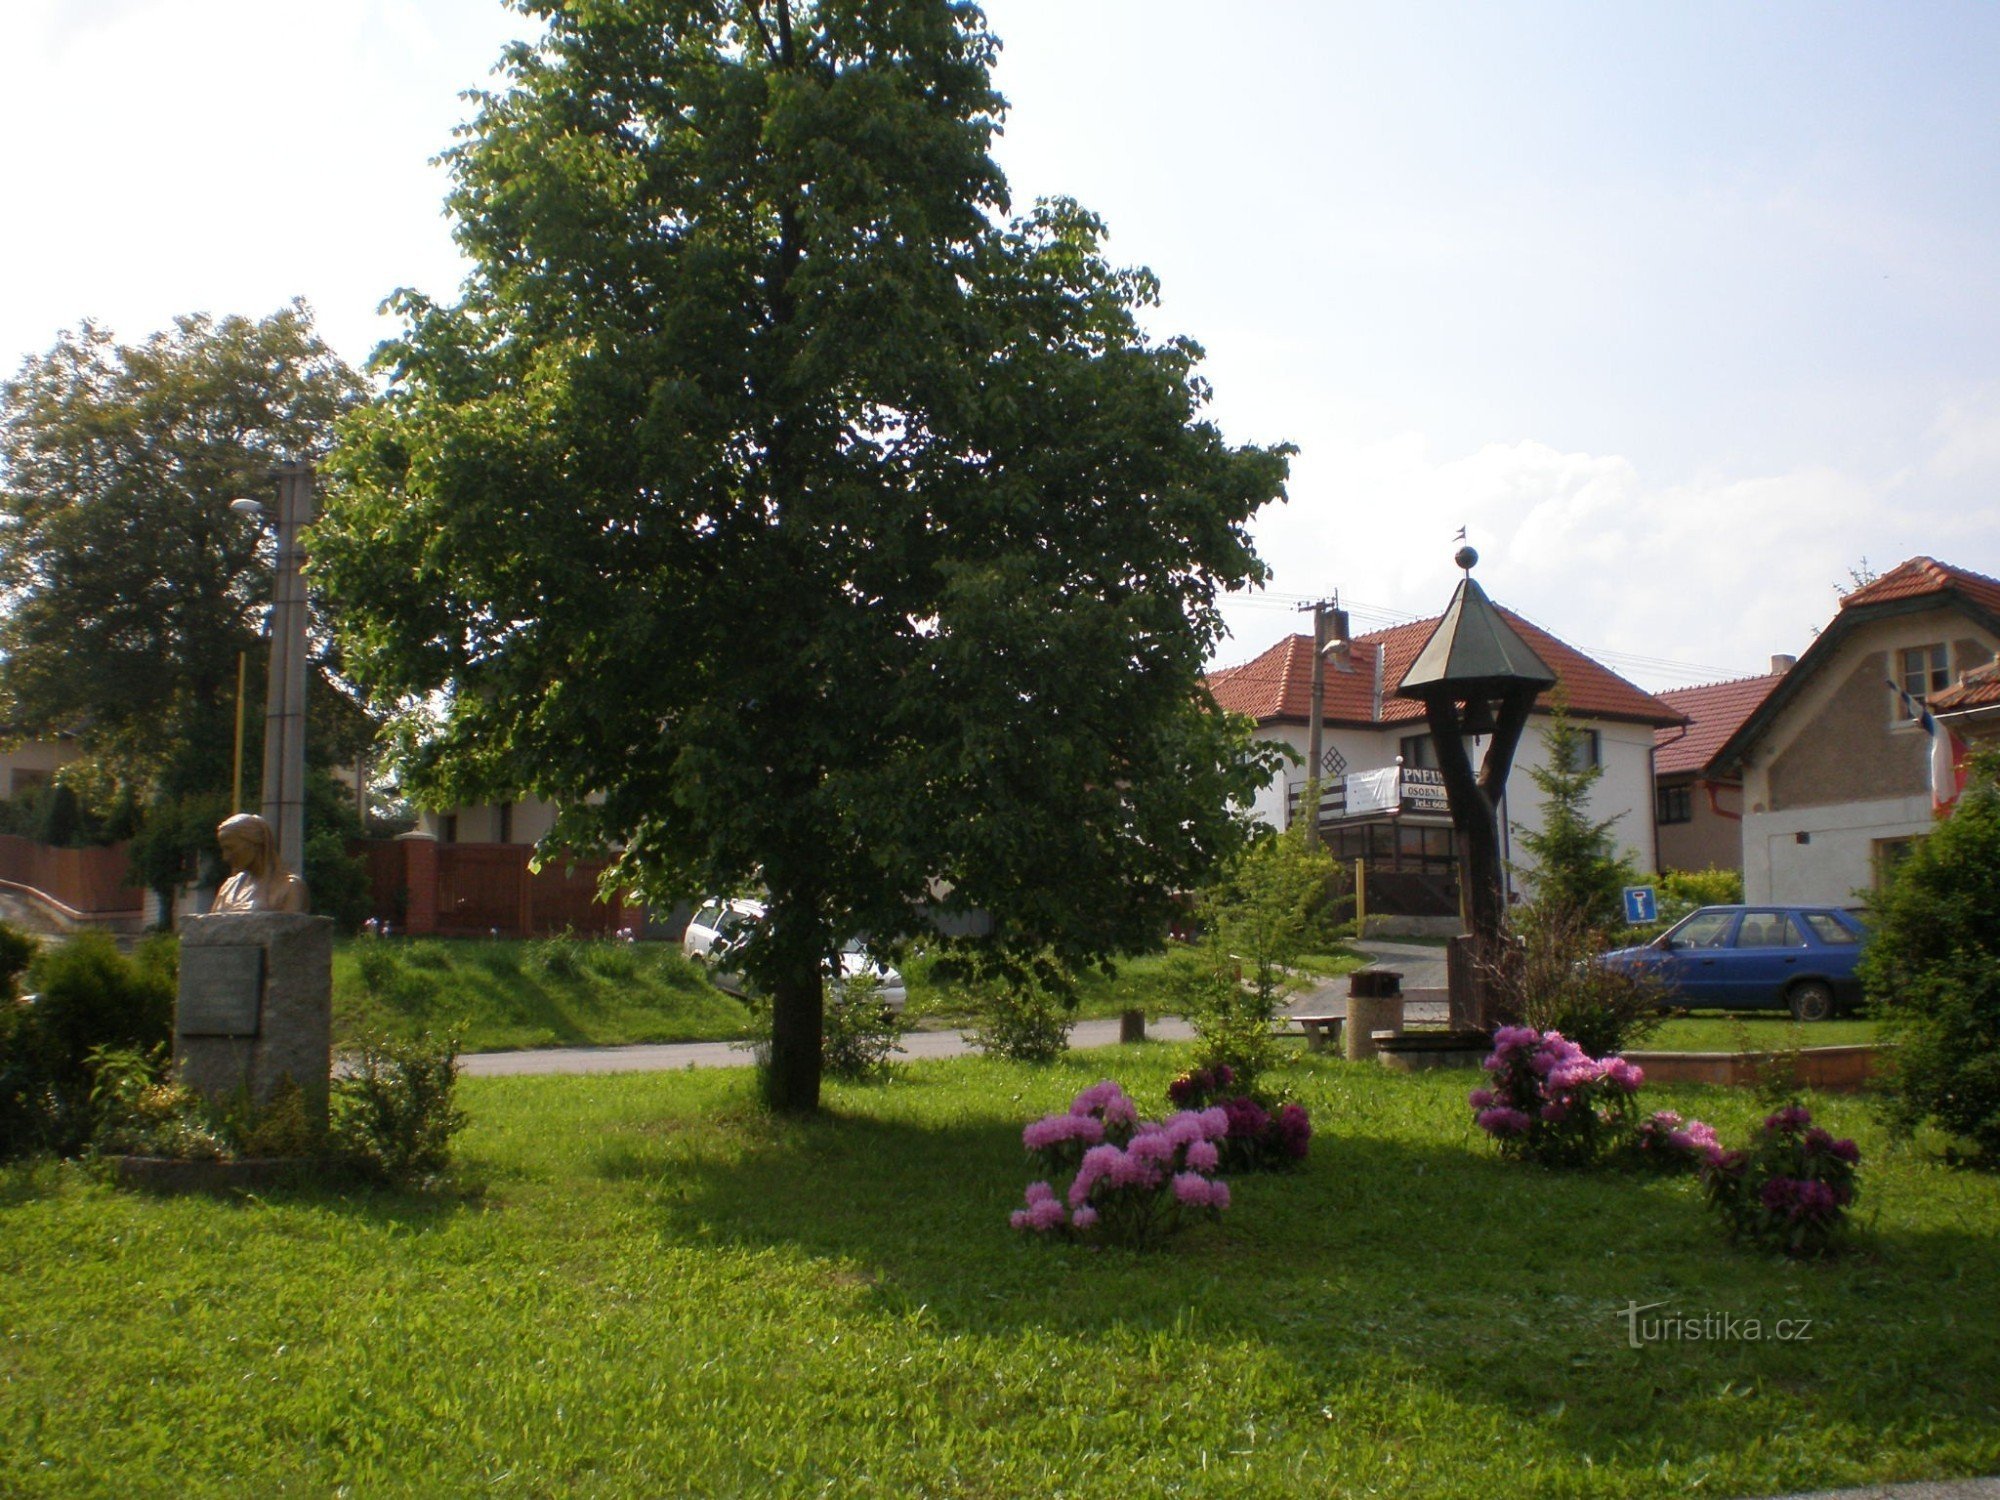 Černé Voděrady - naczepa z dzwonnicą i pomnikiem B. Němcovej